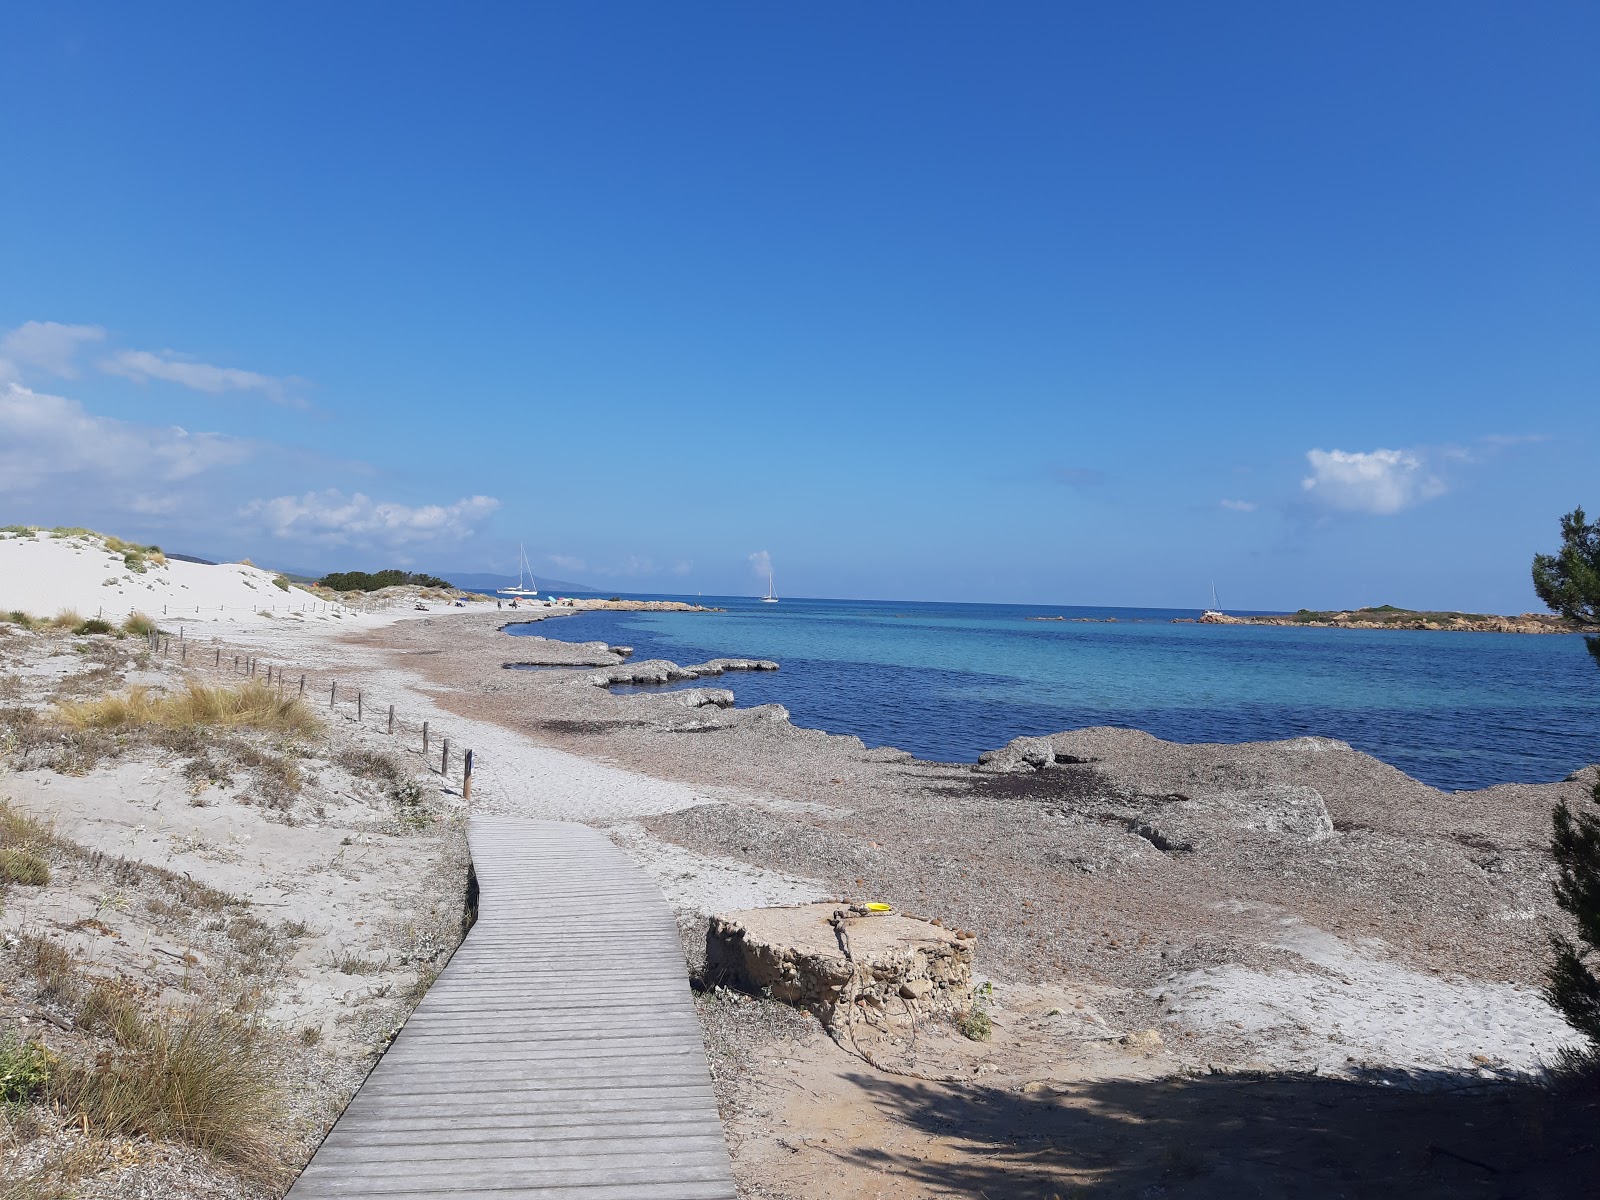 Spiaggia Del Moletto'in fotoğrafı mavi saf su yüzey ile